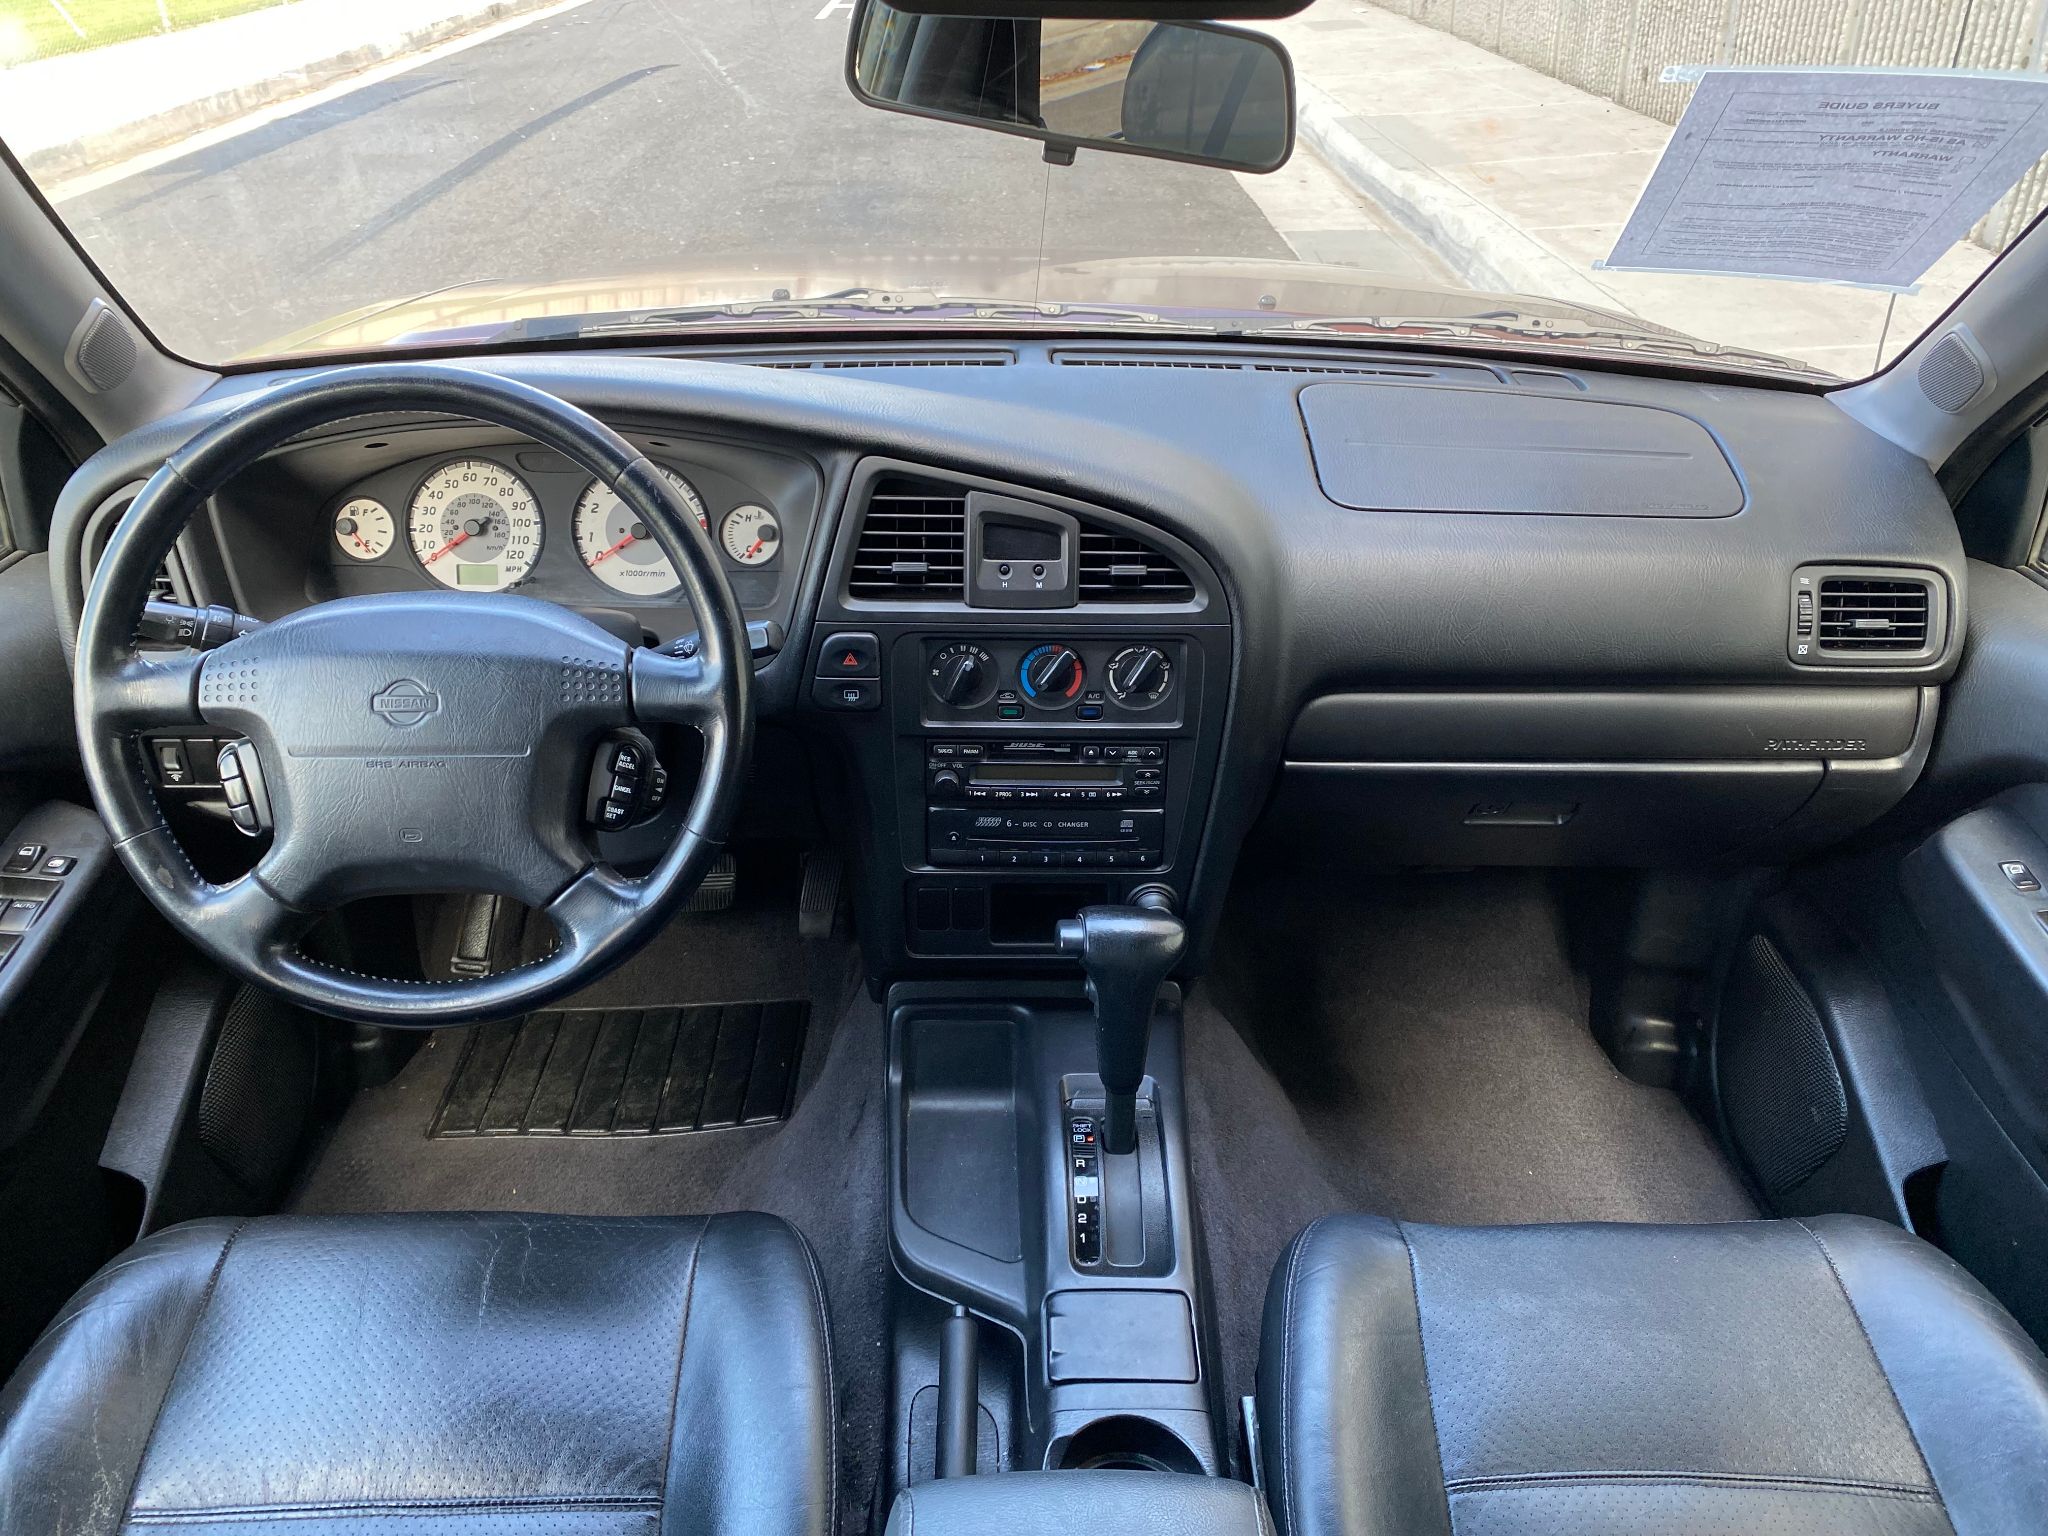 2001 Nissan Pathfinder SE